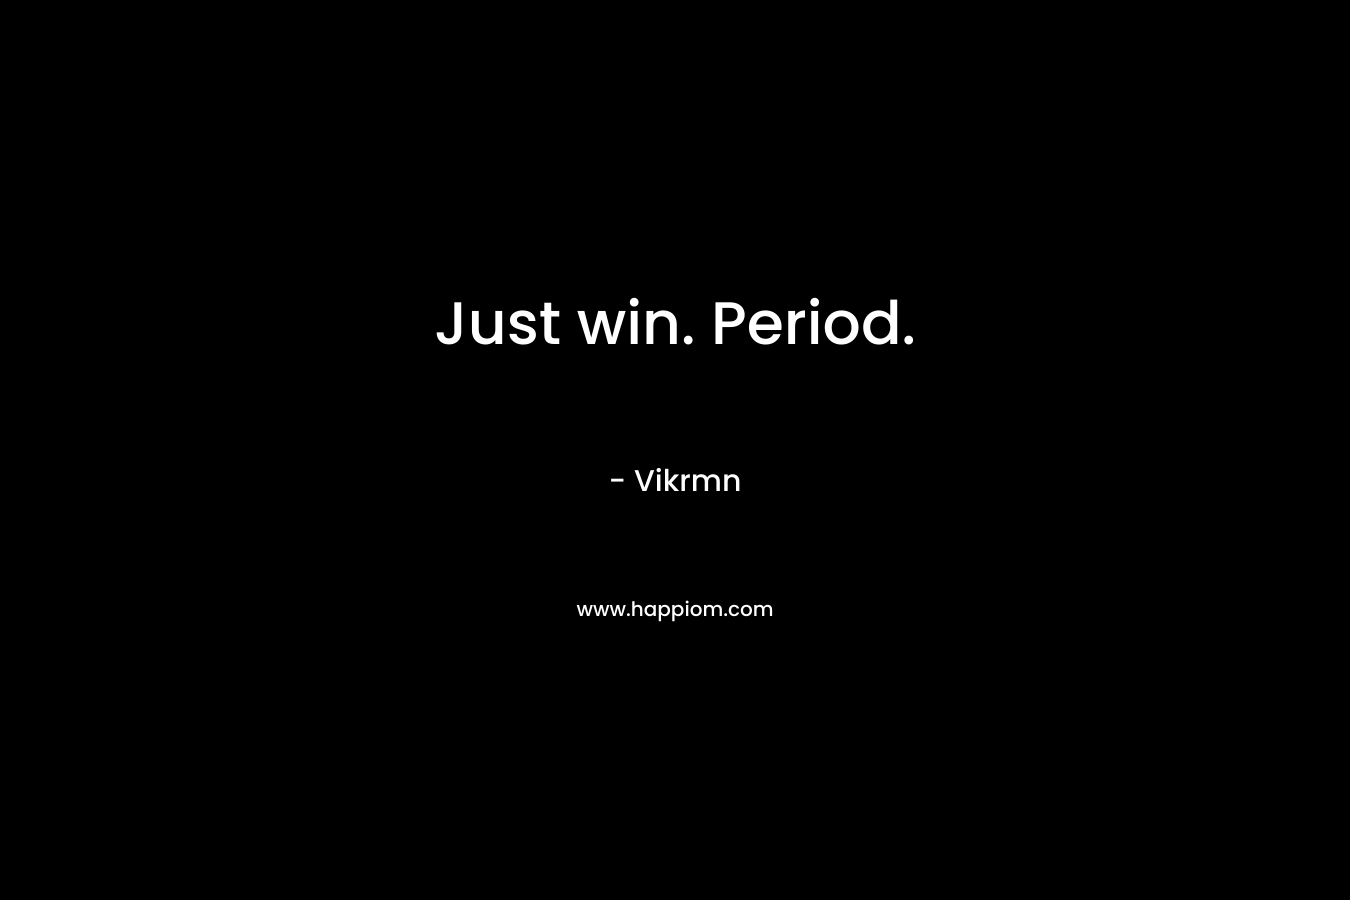 Just win. Period.